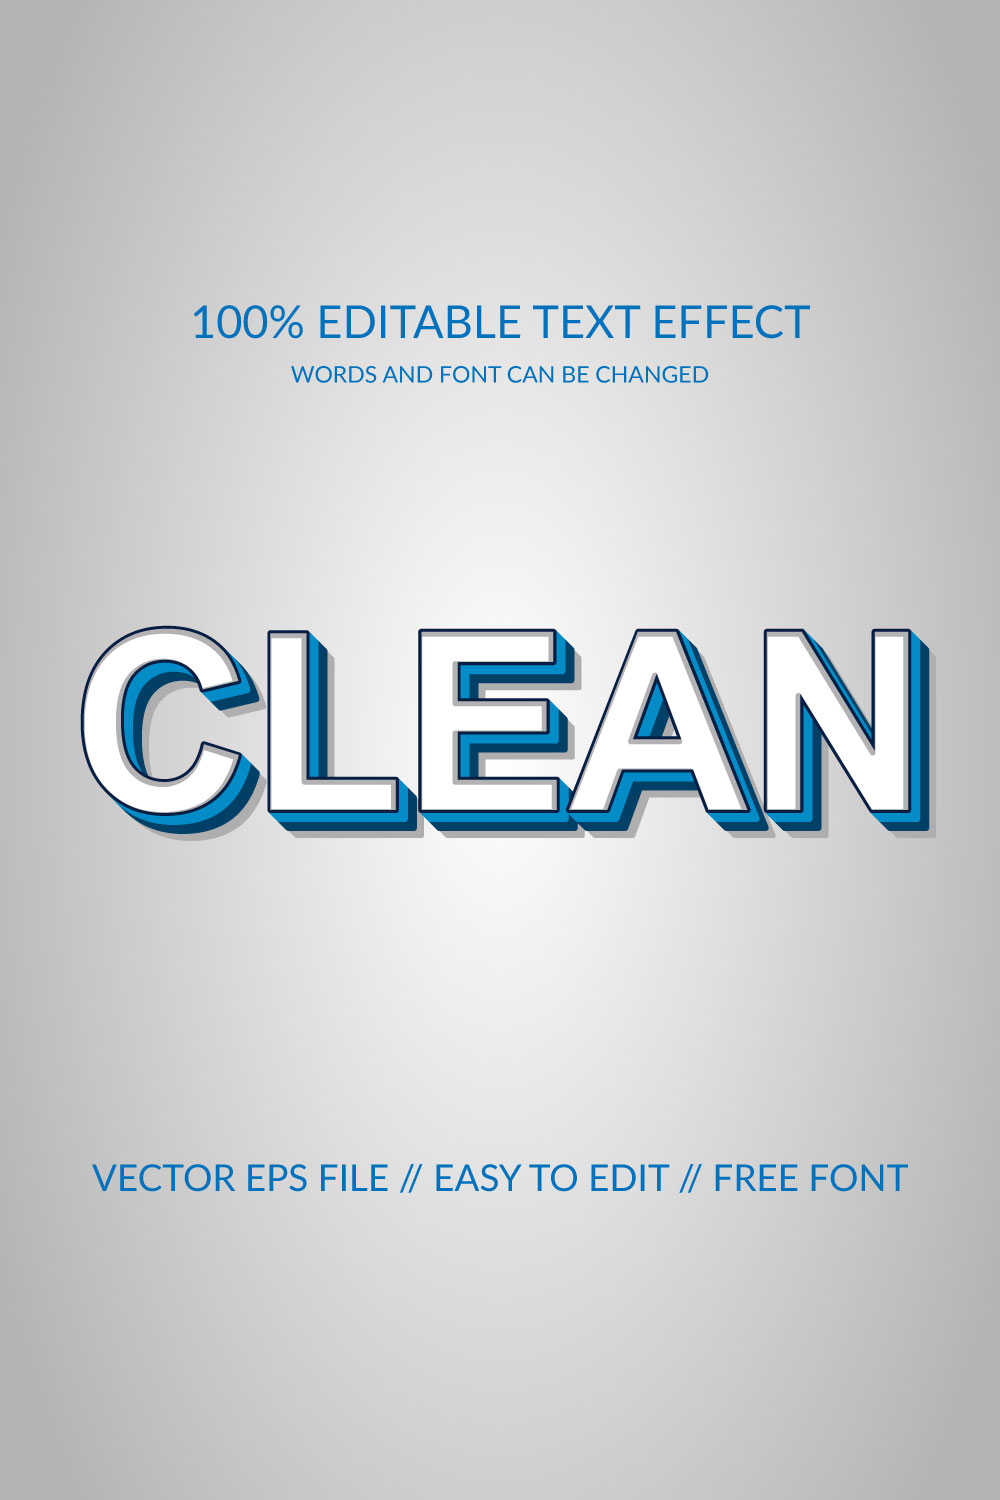 Clean 3d vector eps text effect pinterest preview image.